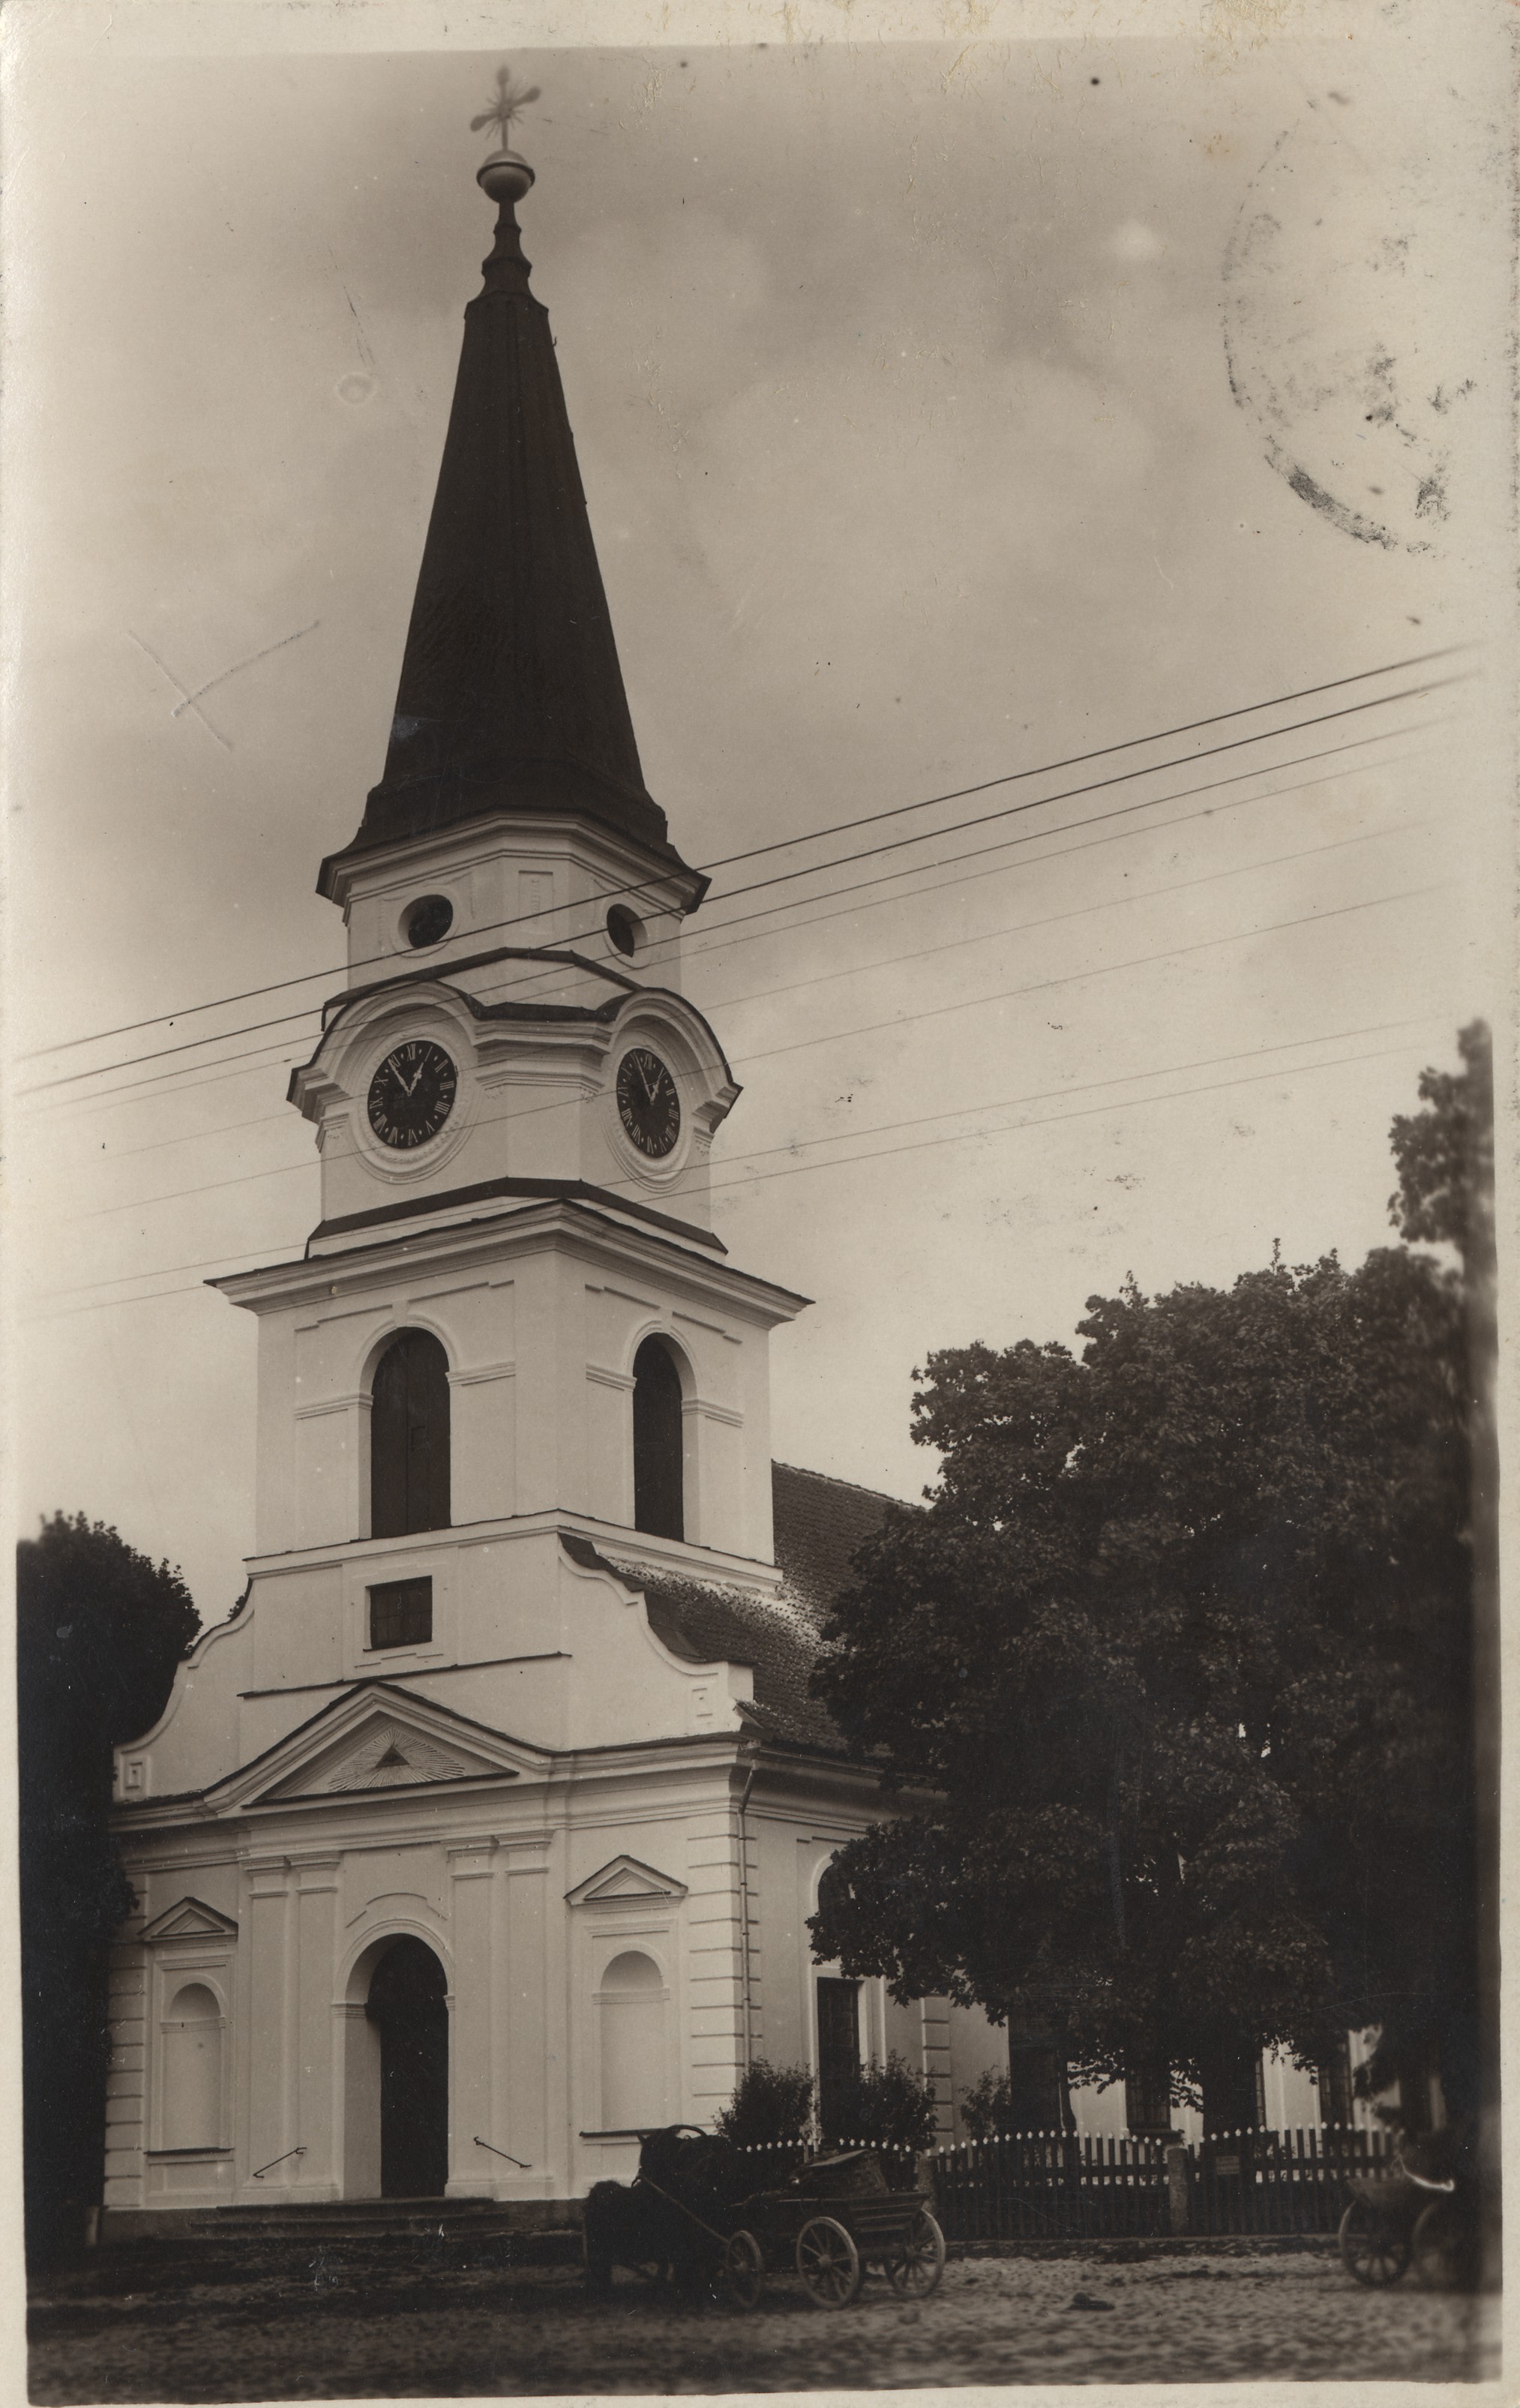 Estonia : Võru church